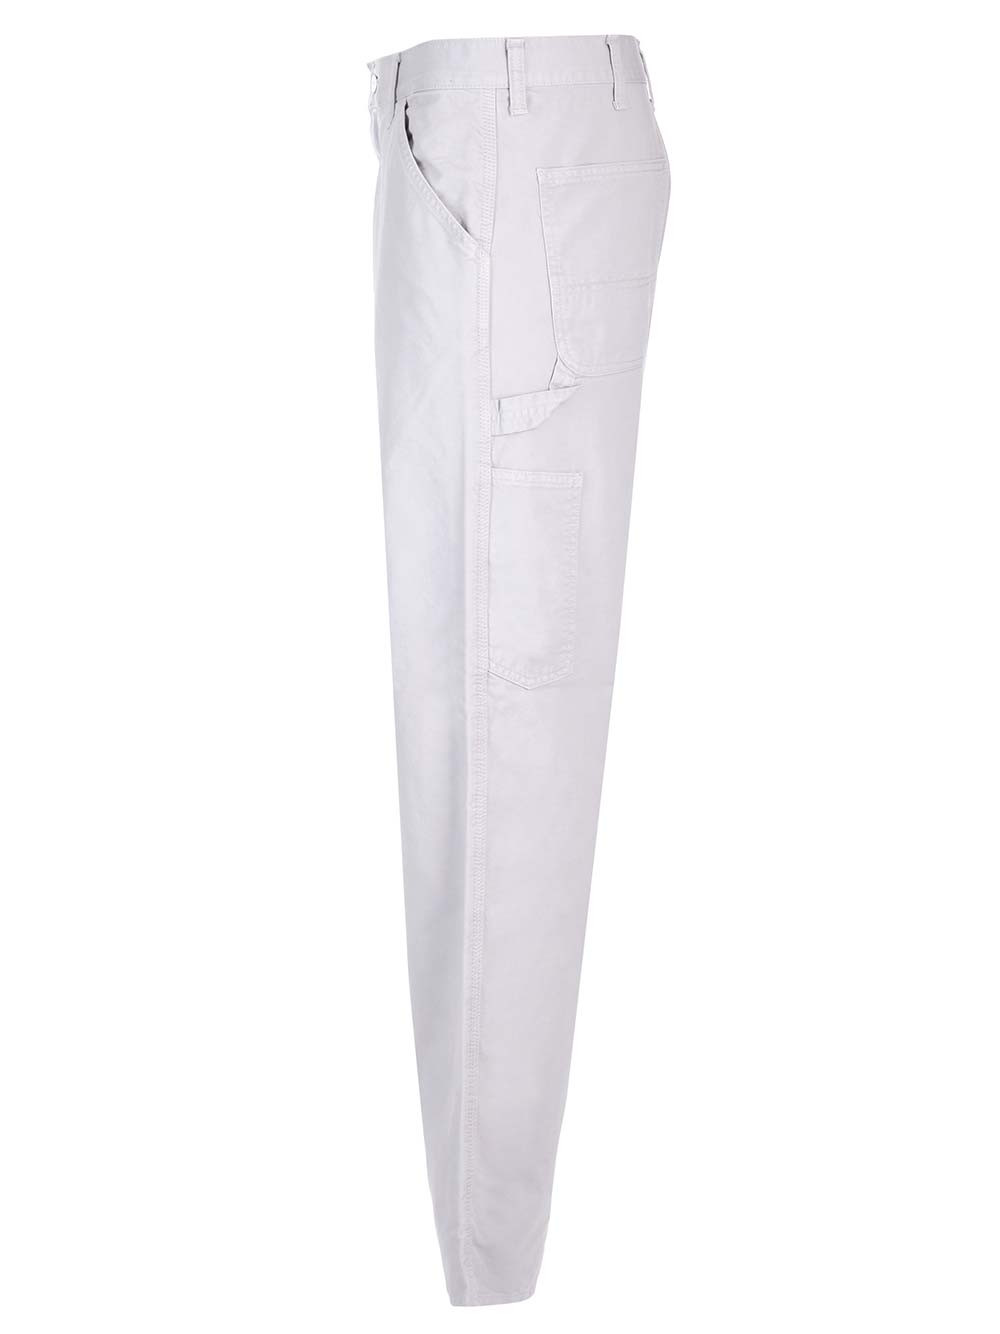 Shop Carhartt Ice Grey Single Knee Pants